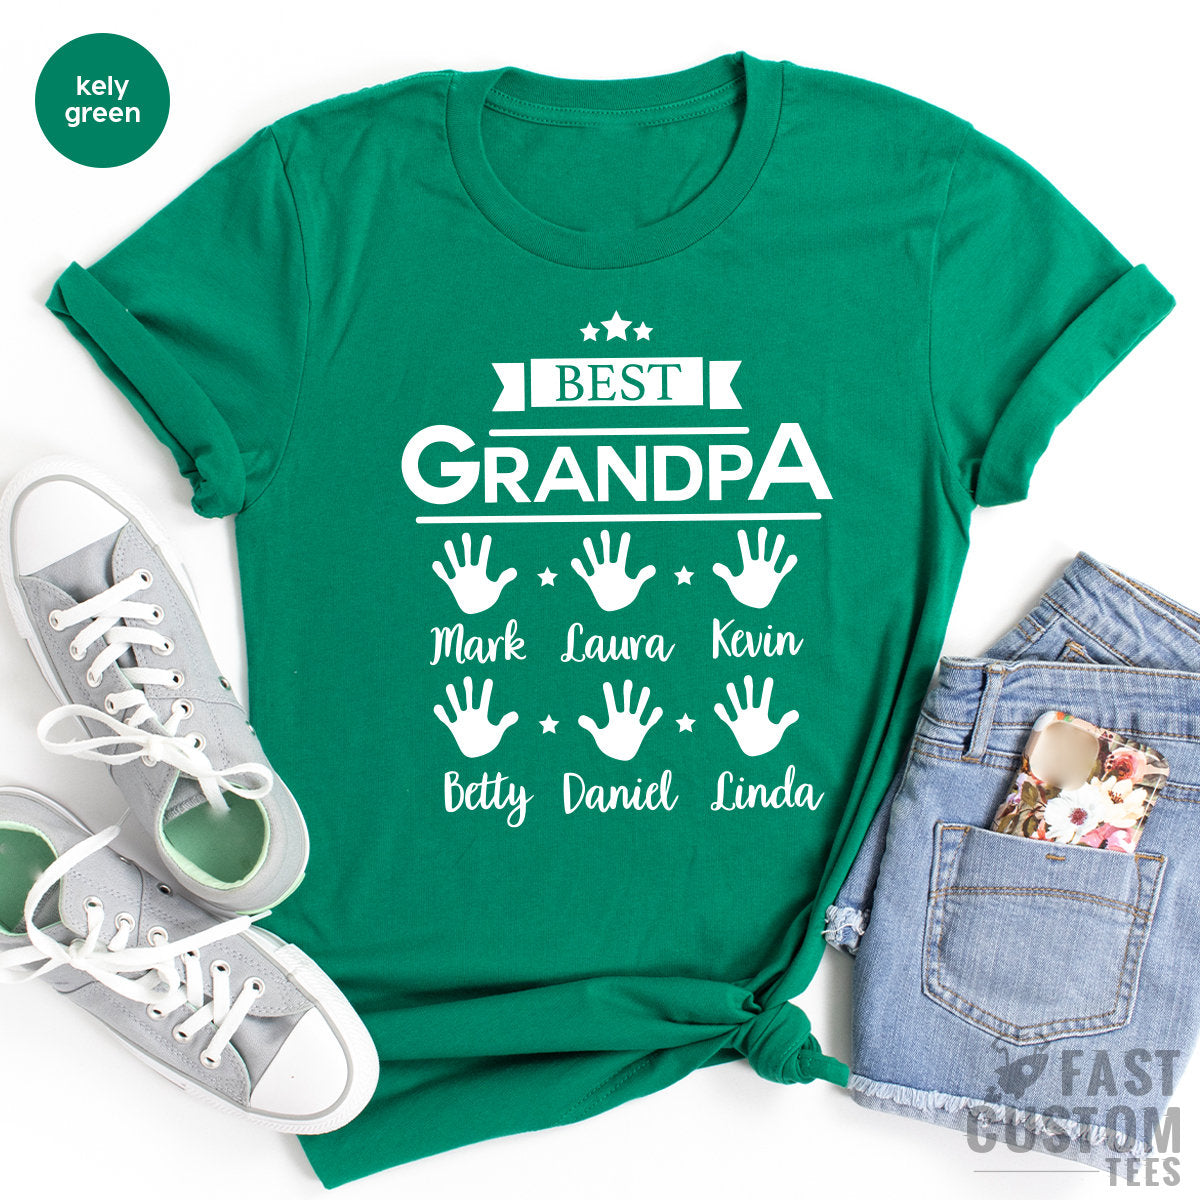 Graphic tees Men Regalos para Hombre Unique Gifts for Grandpa Men